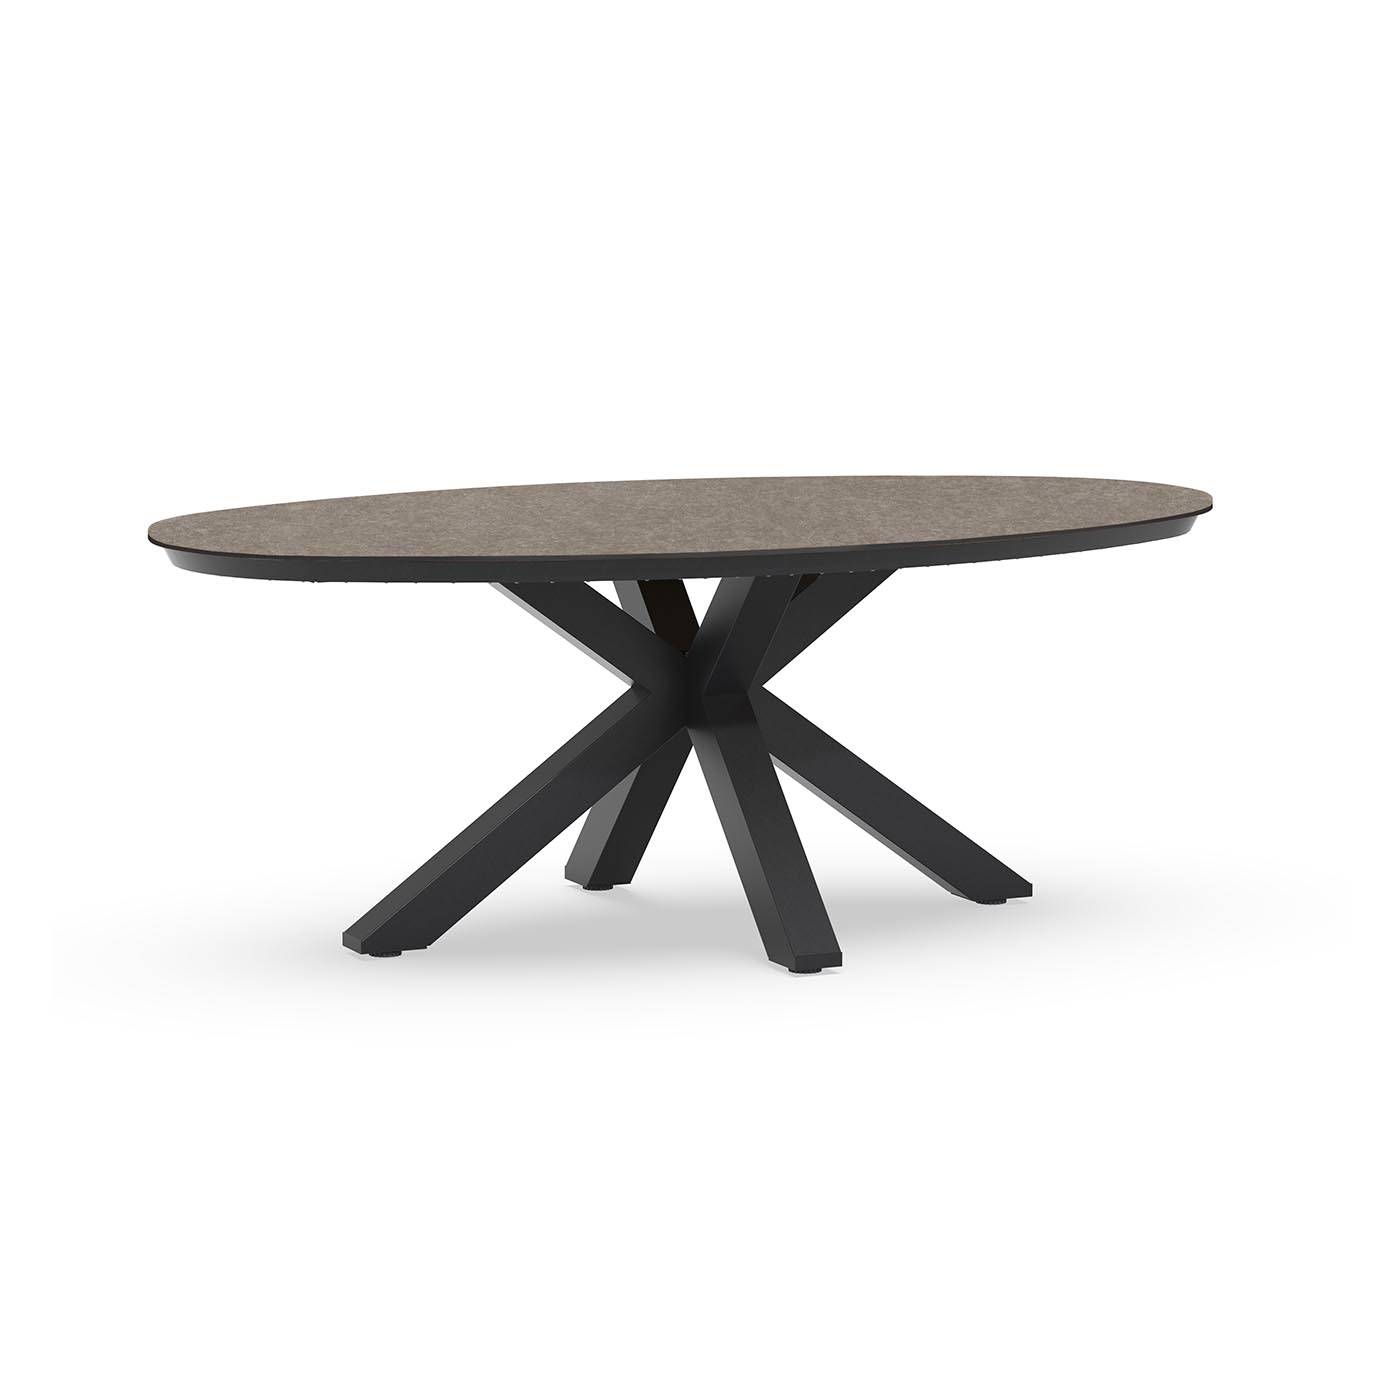 Oblong Dining Table Trespa Dark Basalt 200 x 110 cm Charcoal